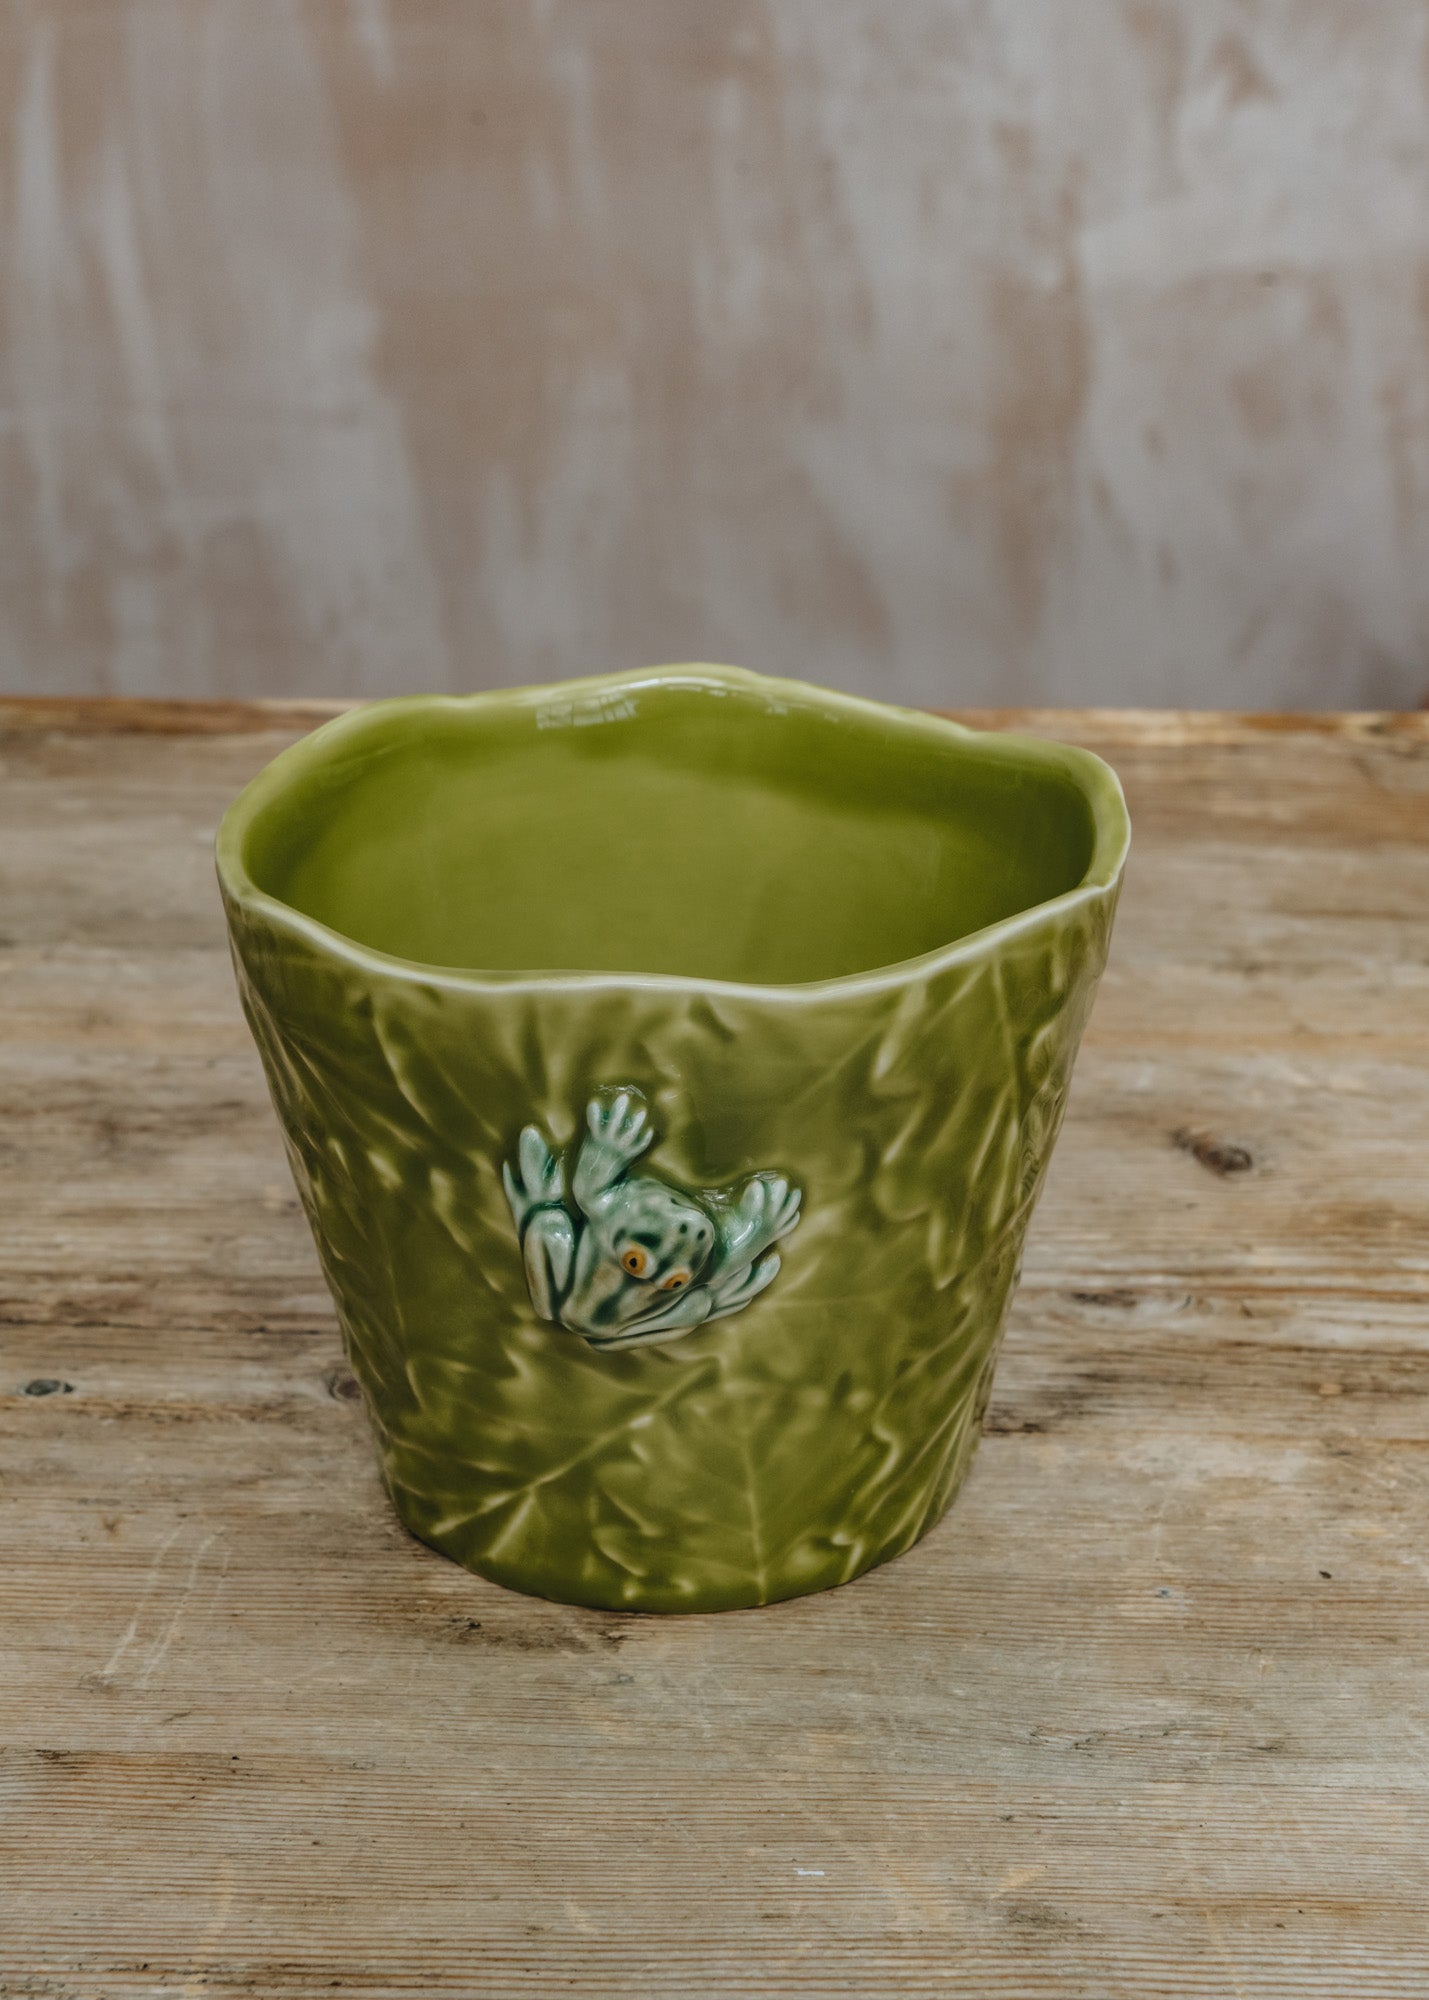 Bordhallo Pinheiro Frog Vase/Pot Cover